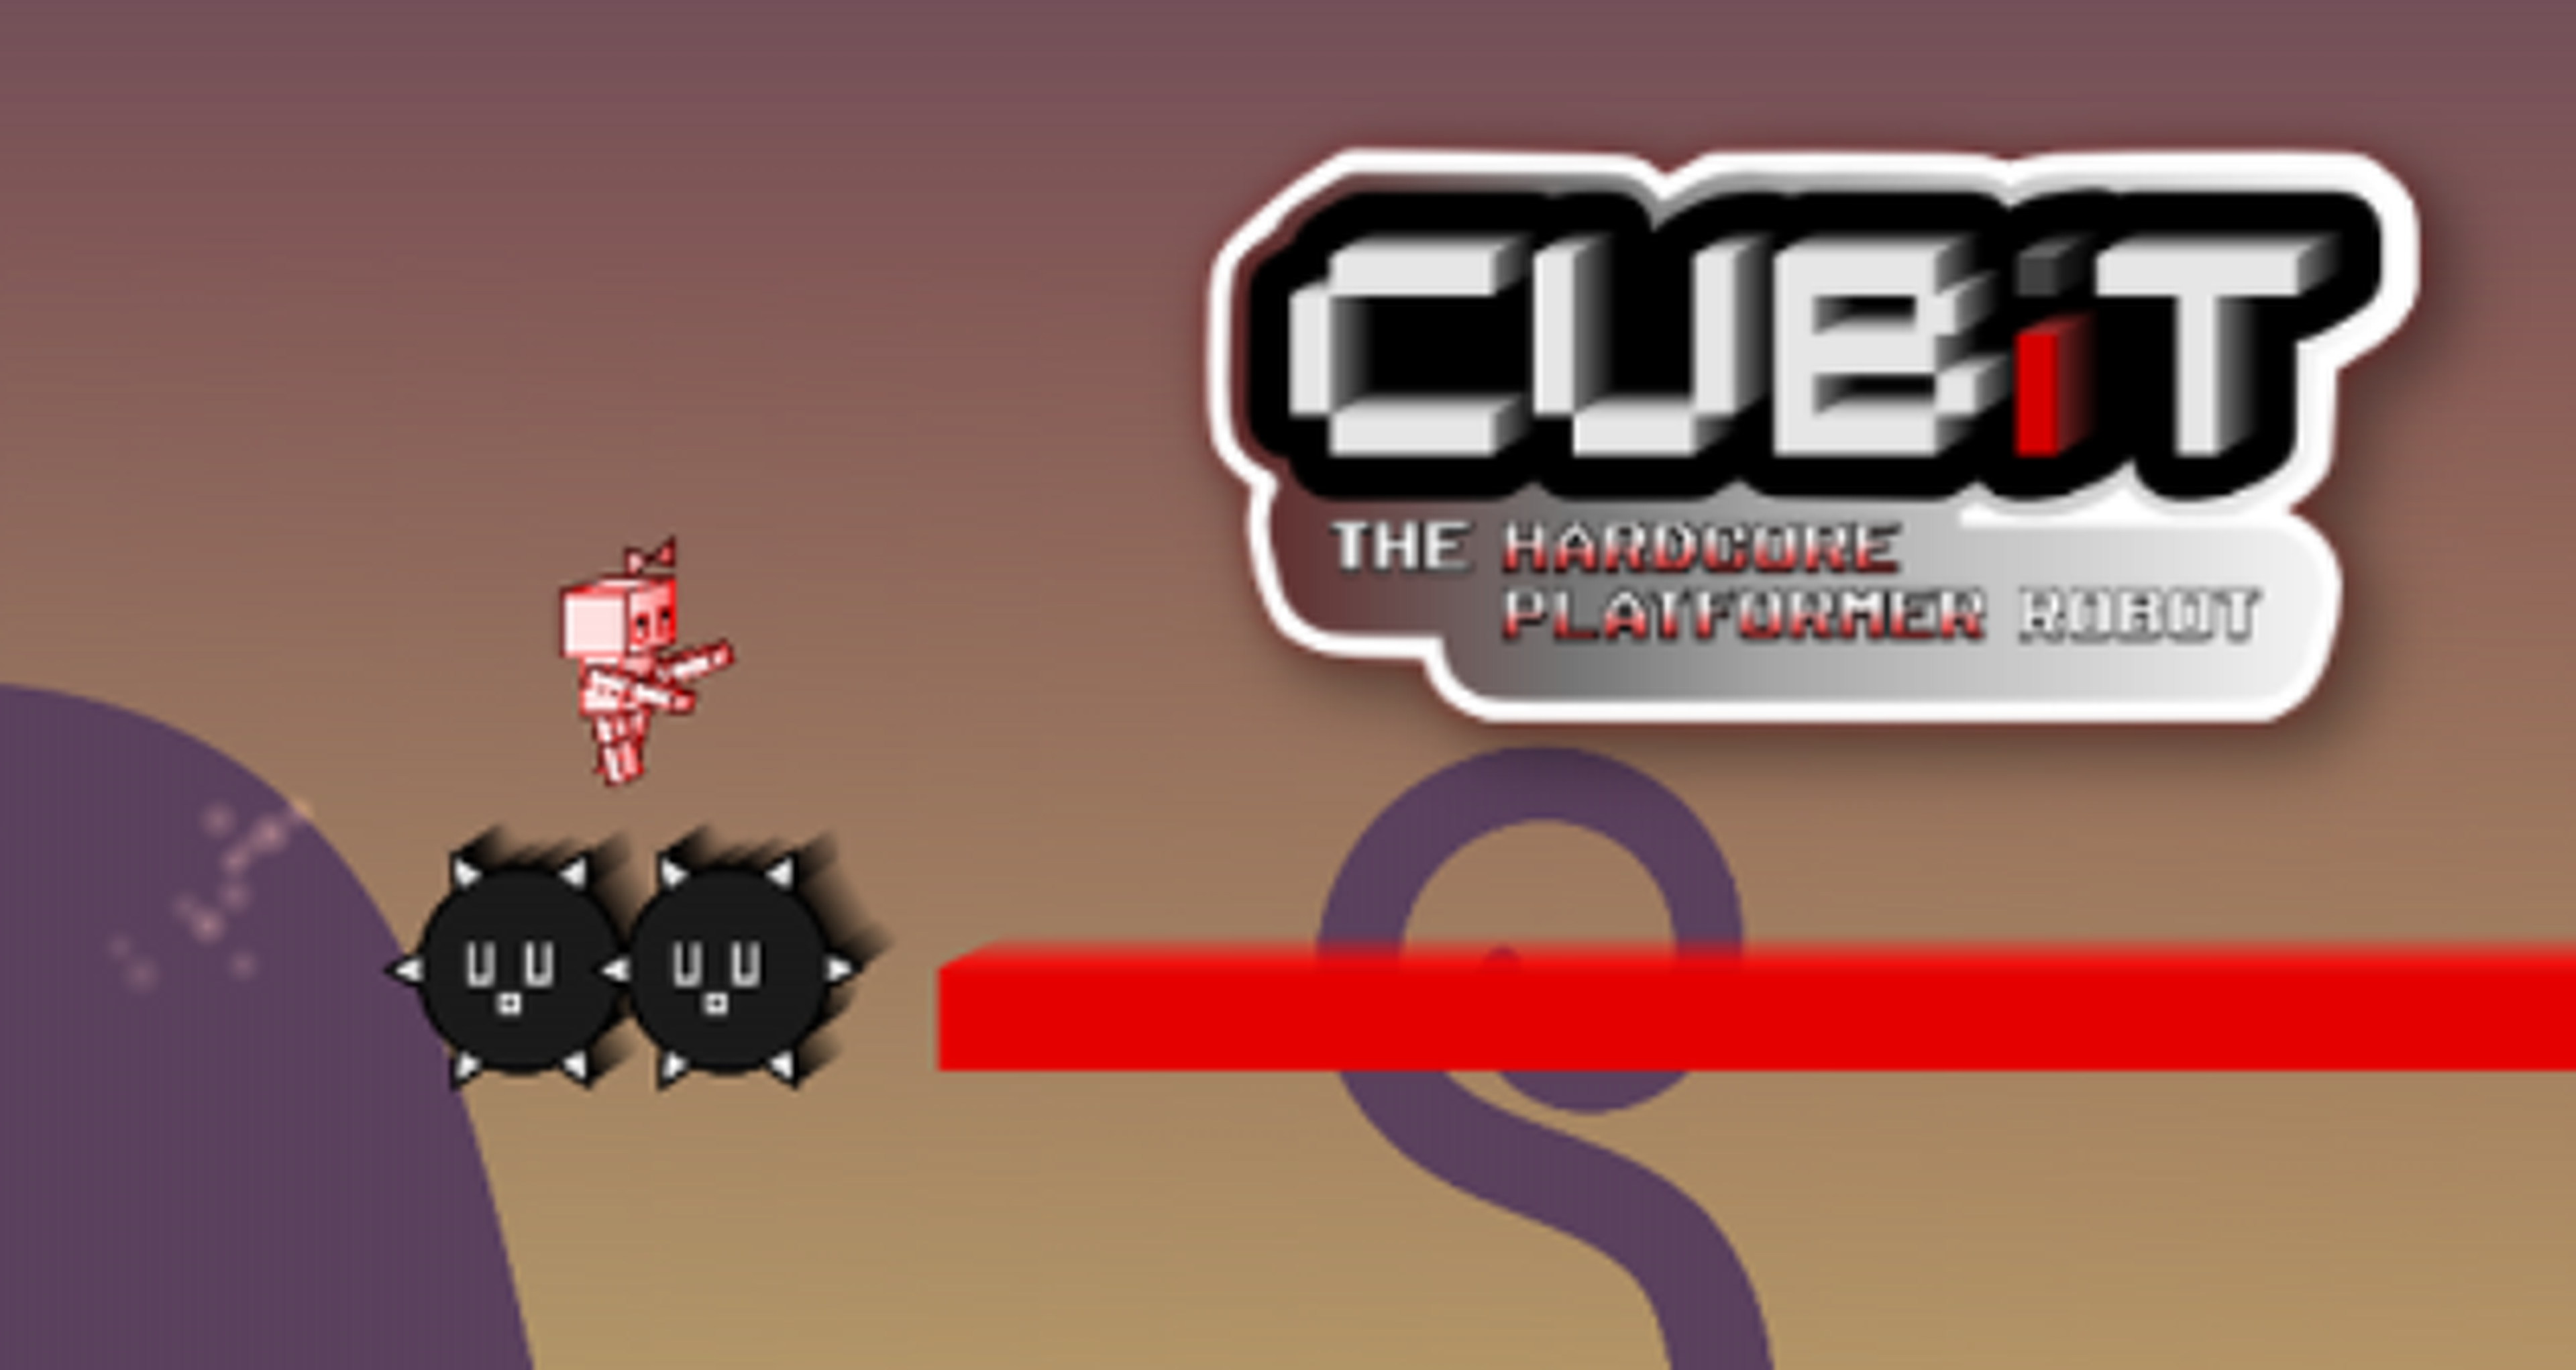 Cubit: The Hardcore Platformer Robot, juego catalán en 3DS